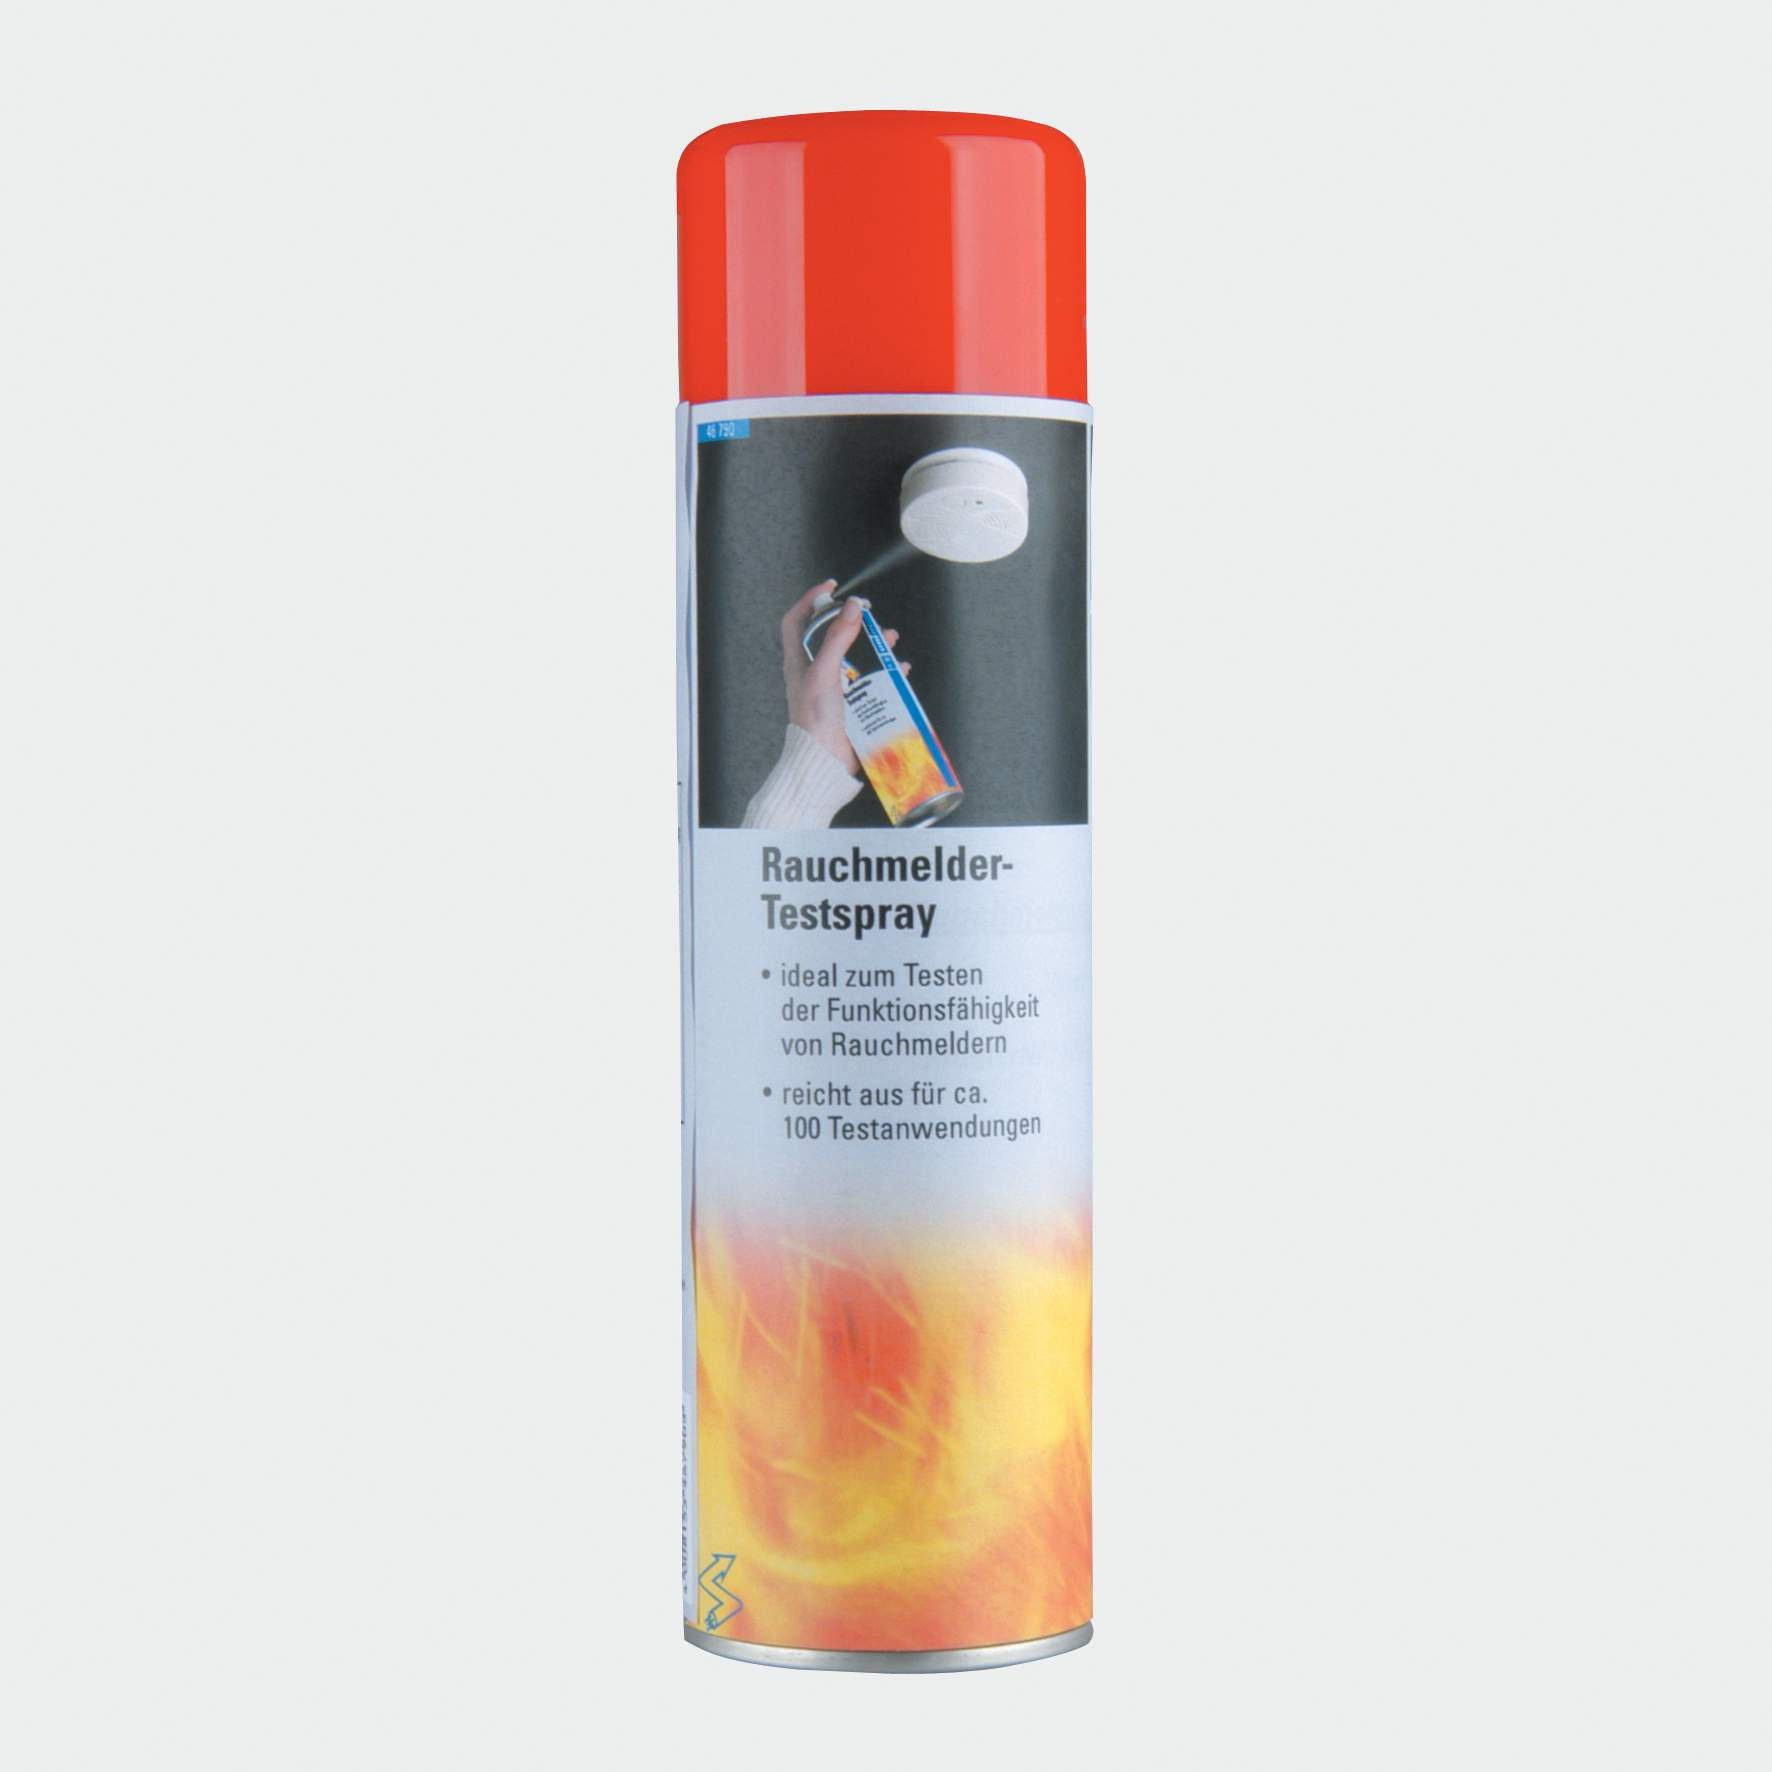 uniTEC Rauchmelder-Testspray 300 ml